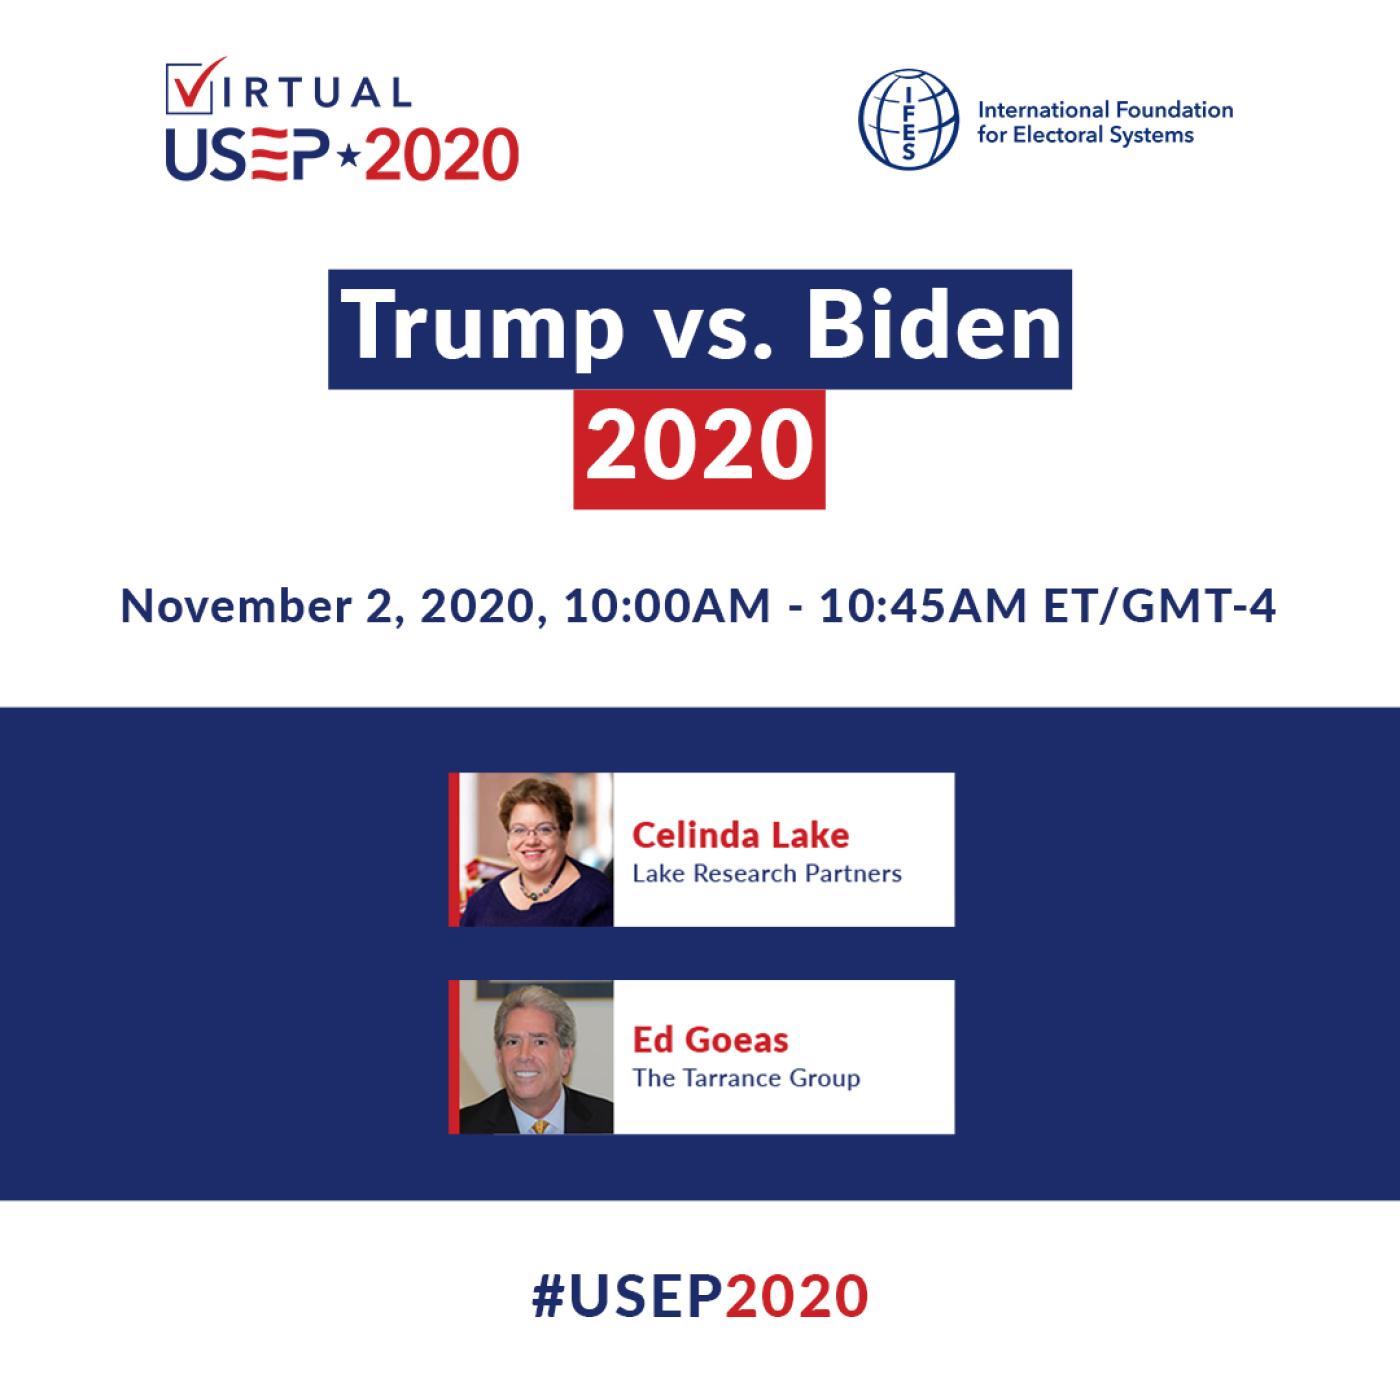 Trump vs. Biden 2020